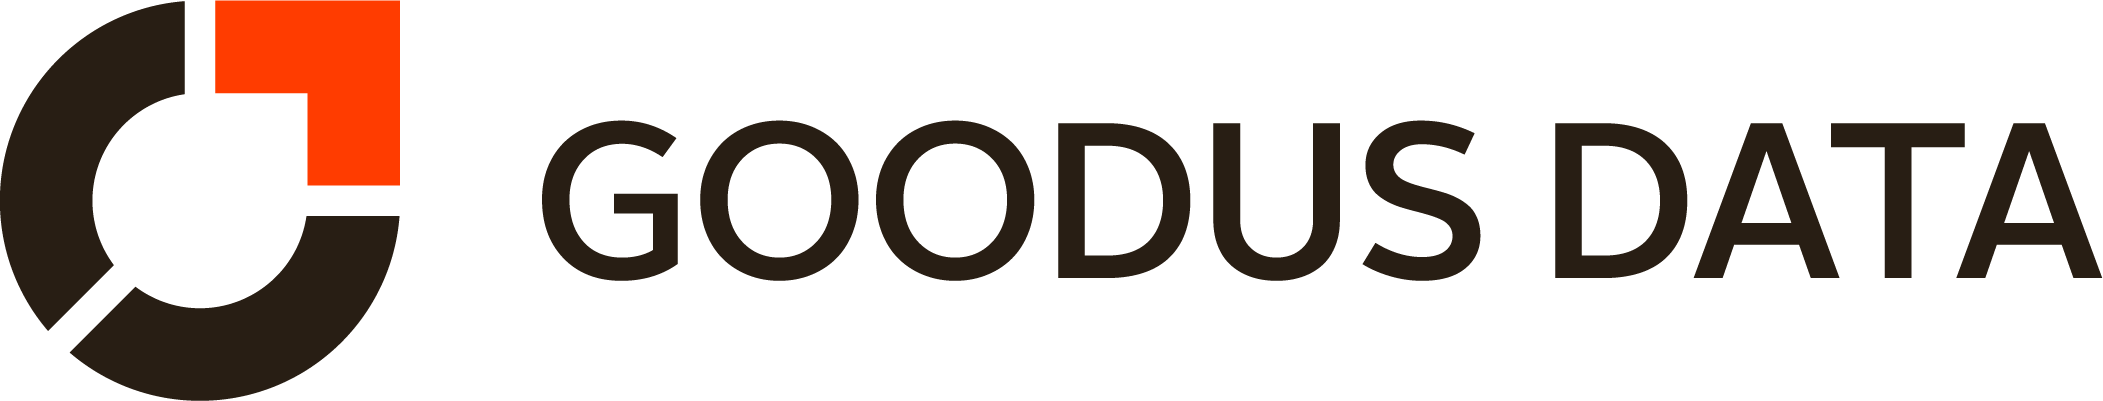 GoodusData logo